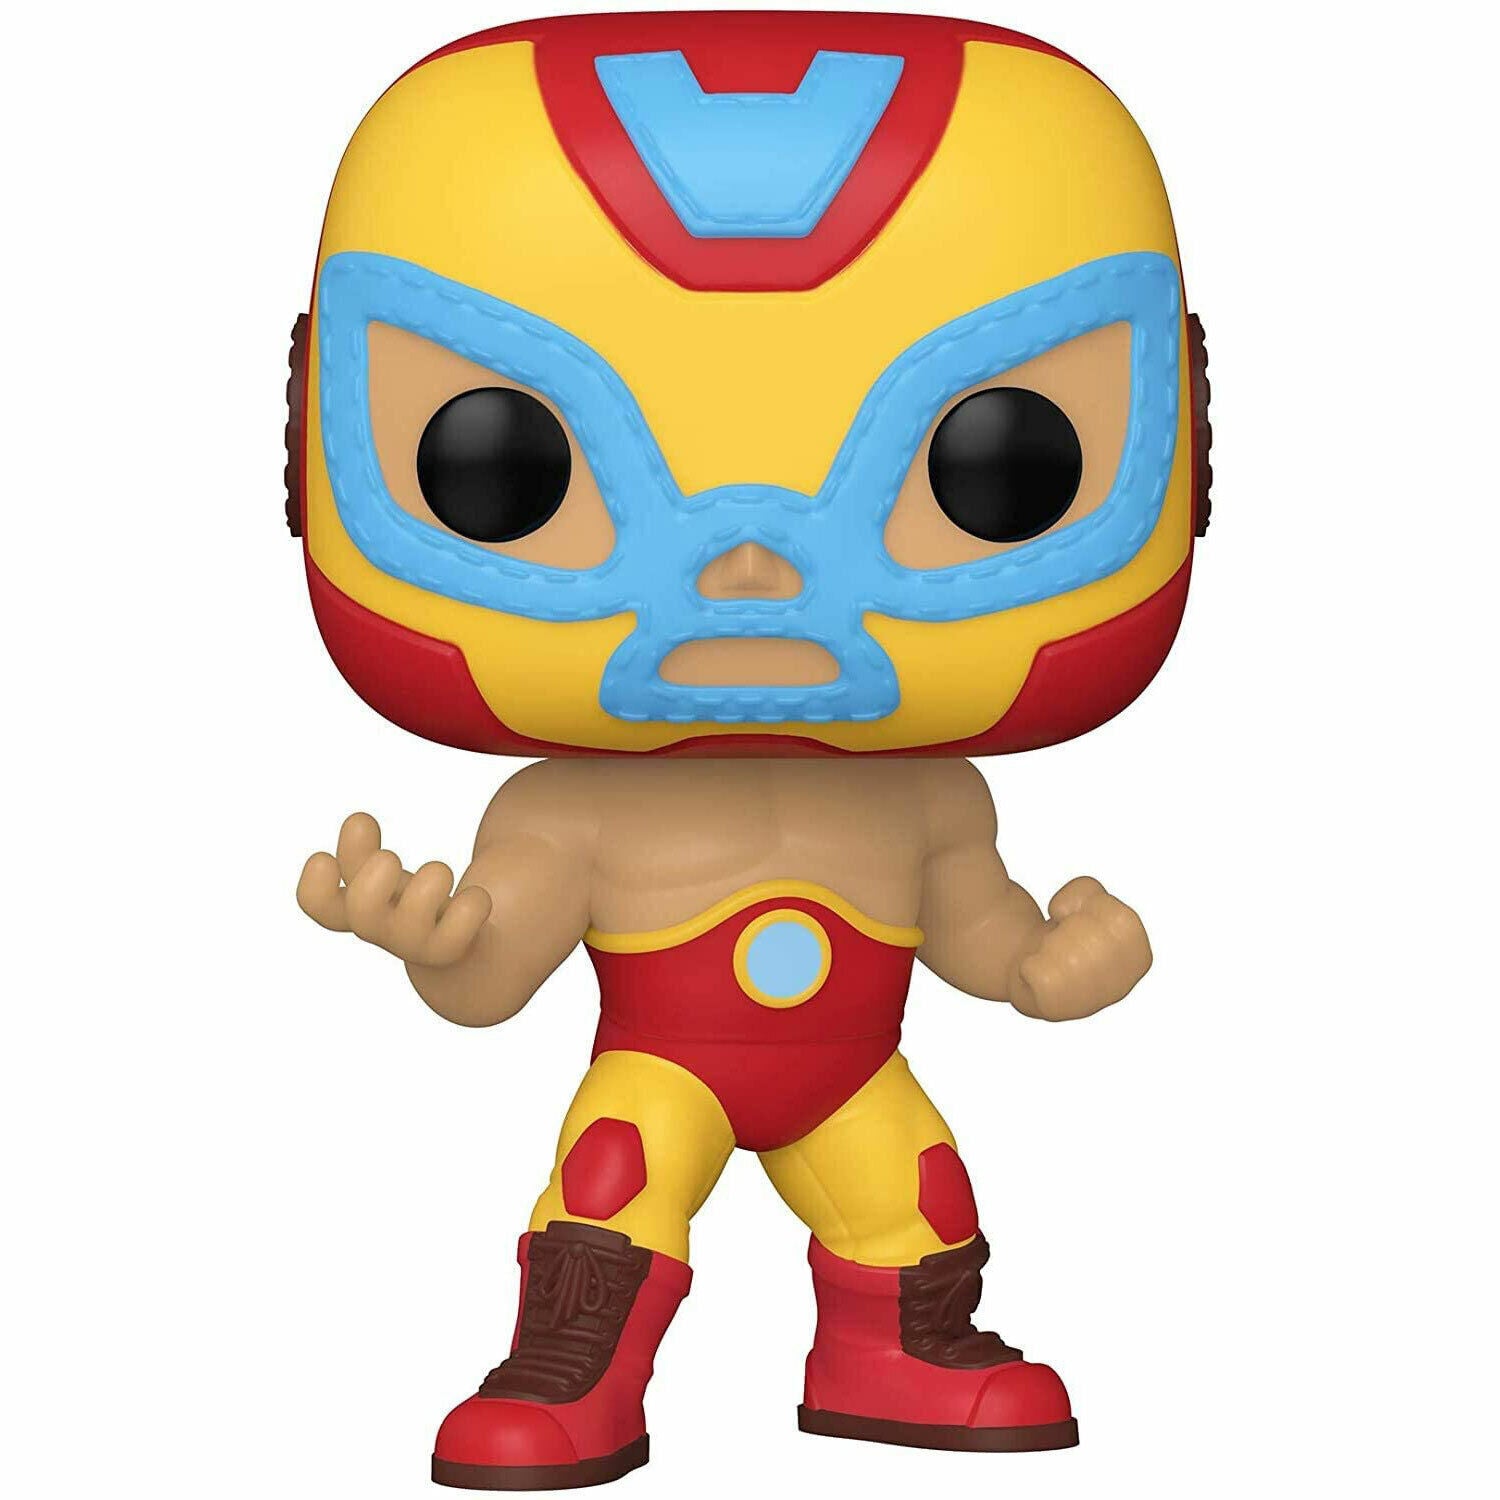 New Marvel Luchadores Pop! Vinyl Figure - El Heroe Invicto (Iron Man)